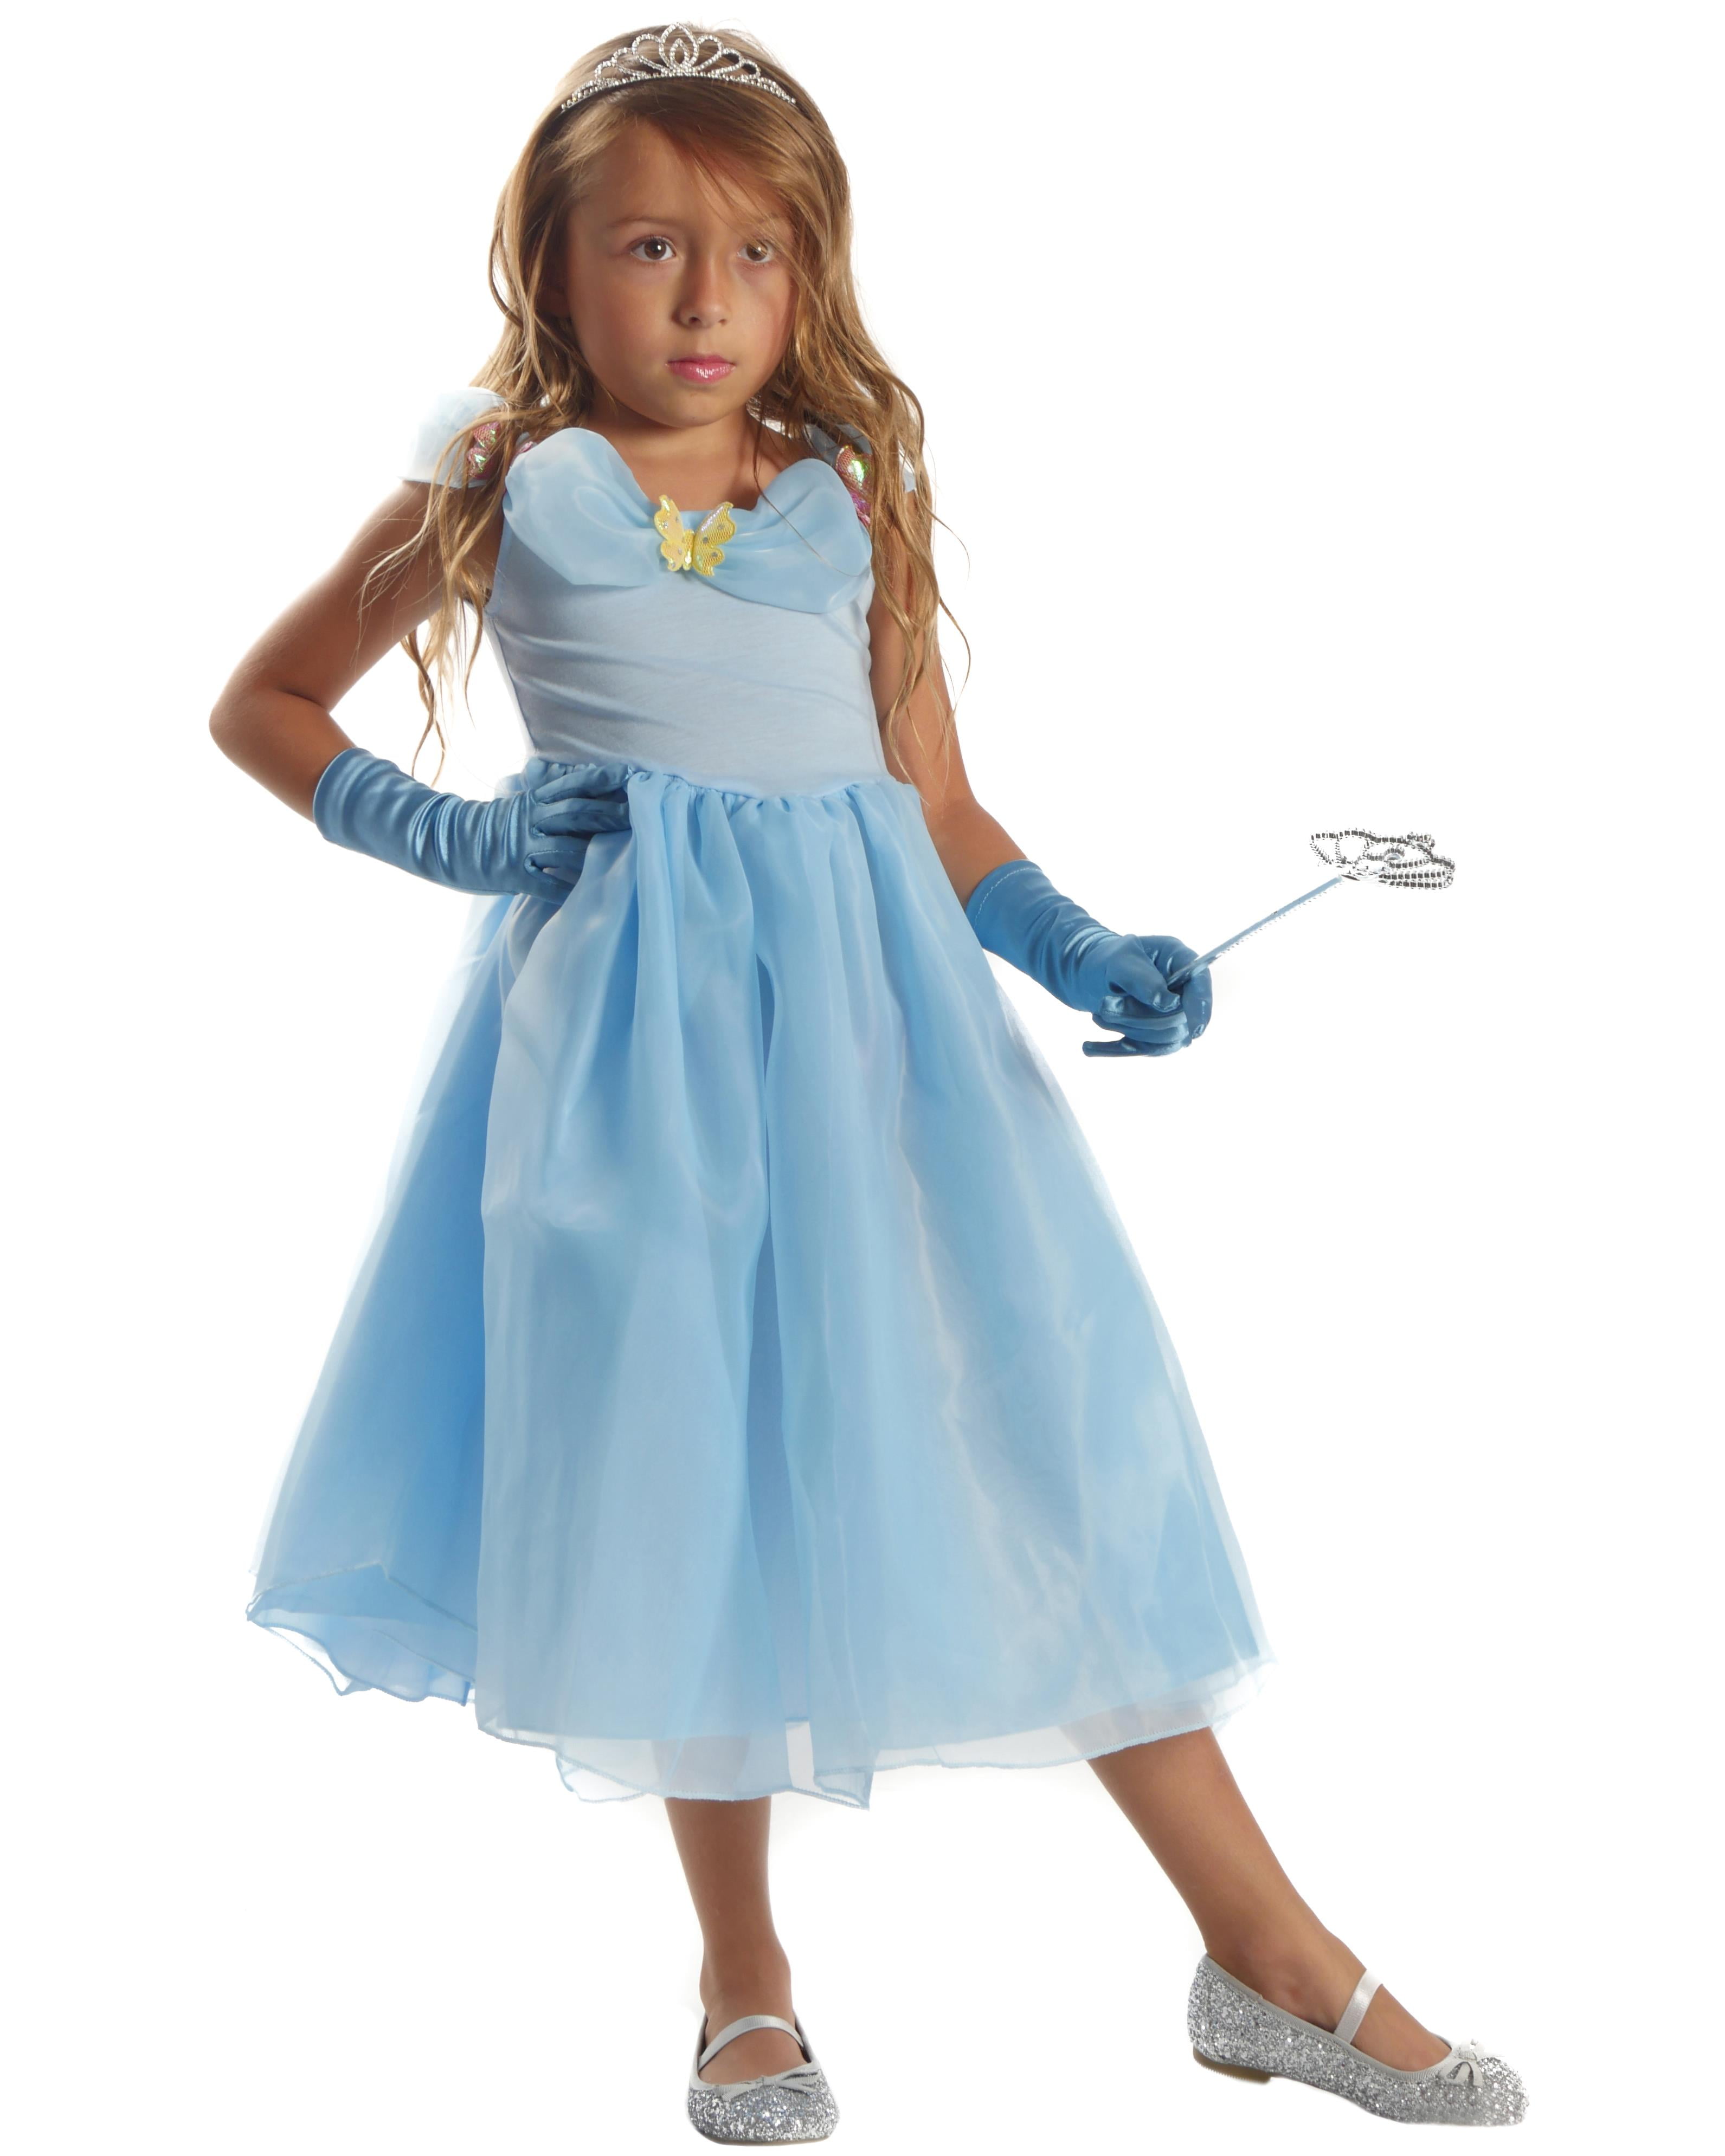 Cinderella Princess Dresses For Girls